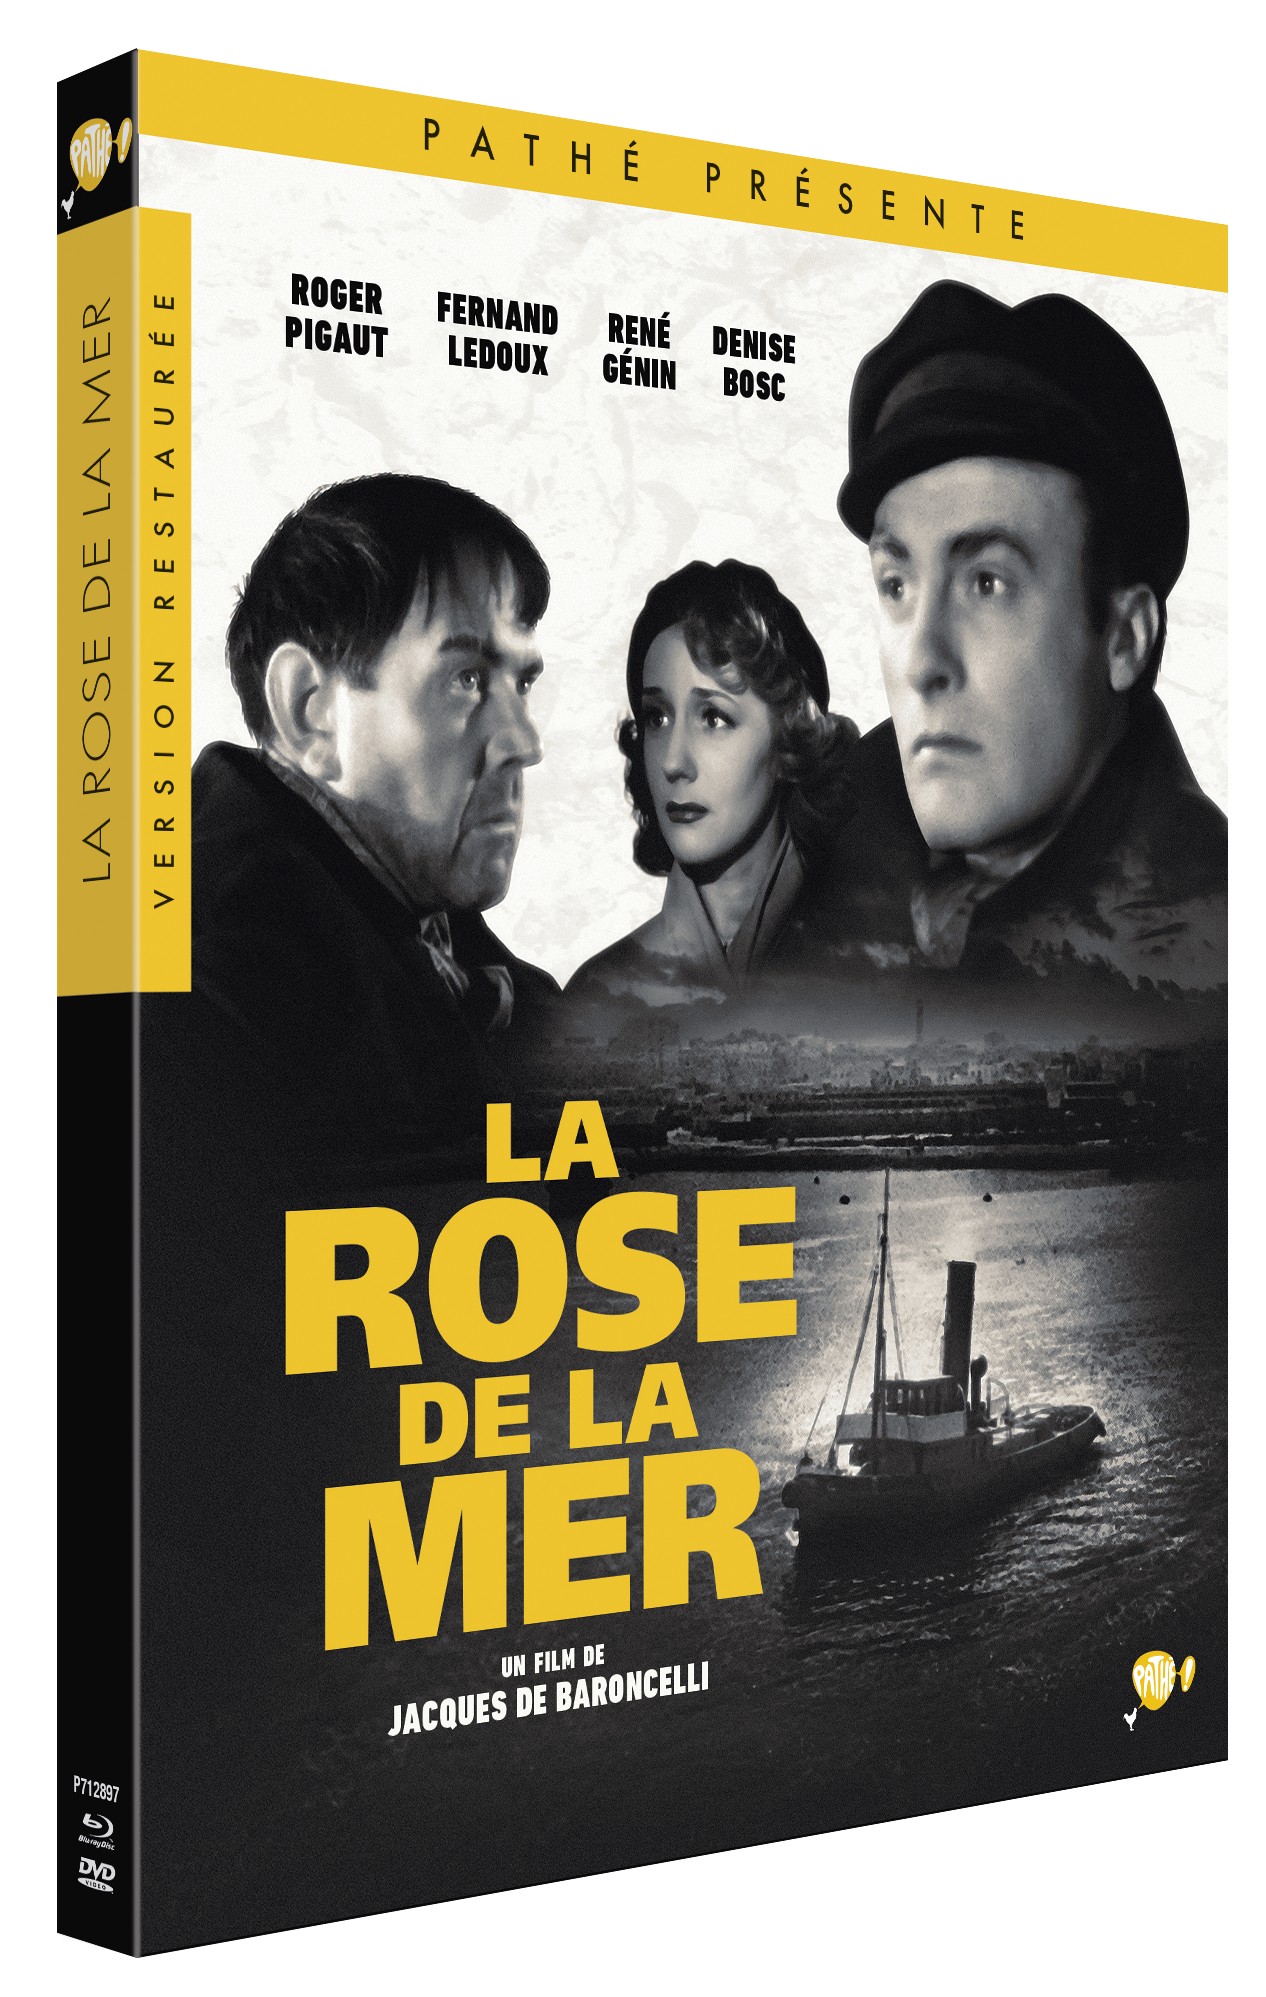 ROSE DE LA MER (LA) - COMBO DVD + BD - EDITION LIMITEE